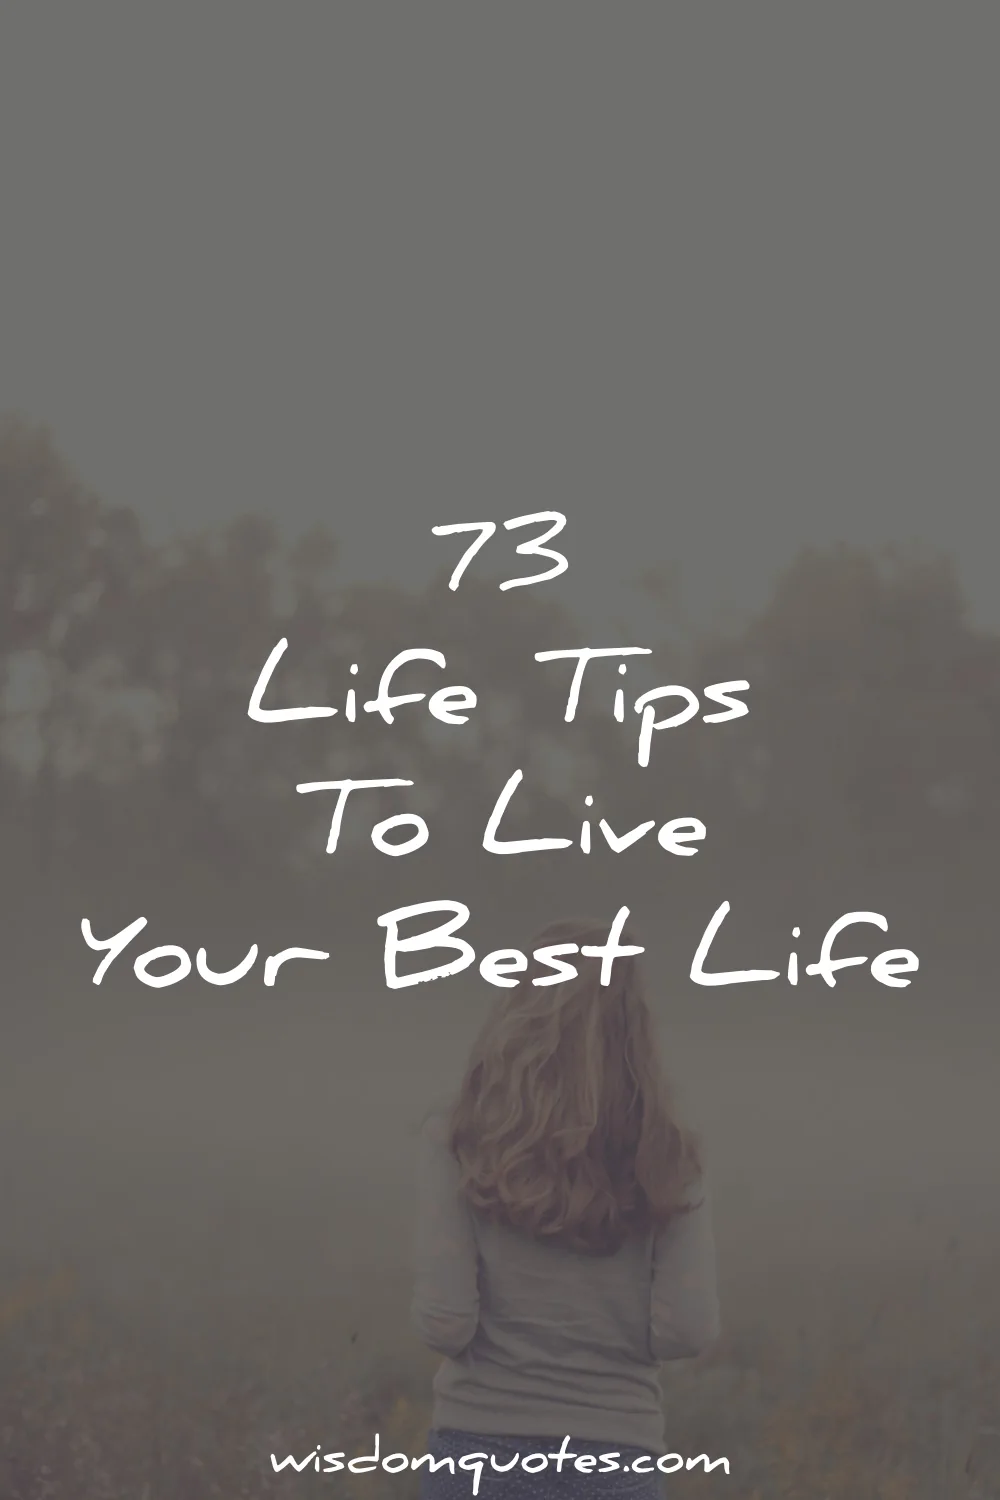 life tips best life wisdom